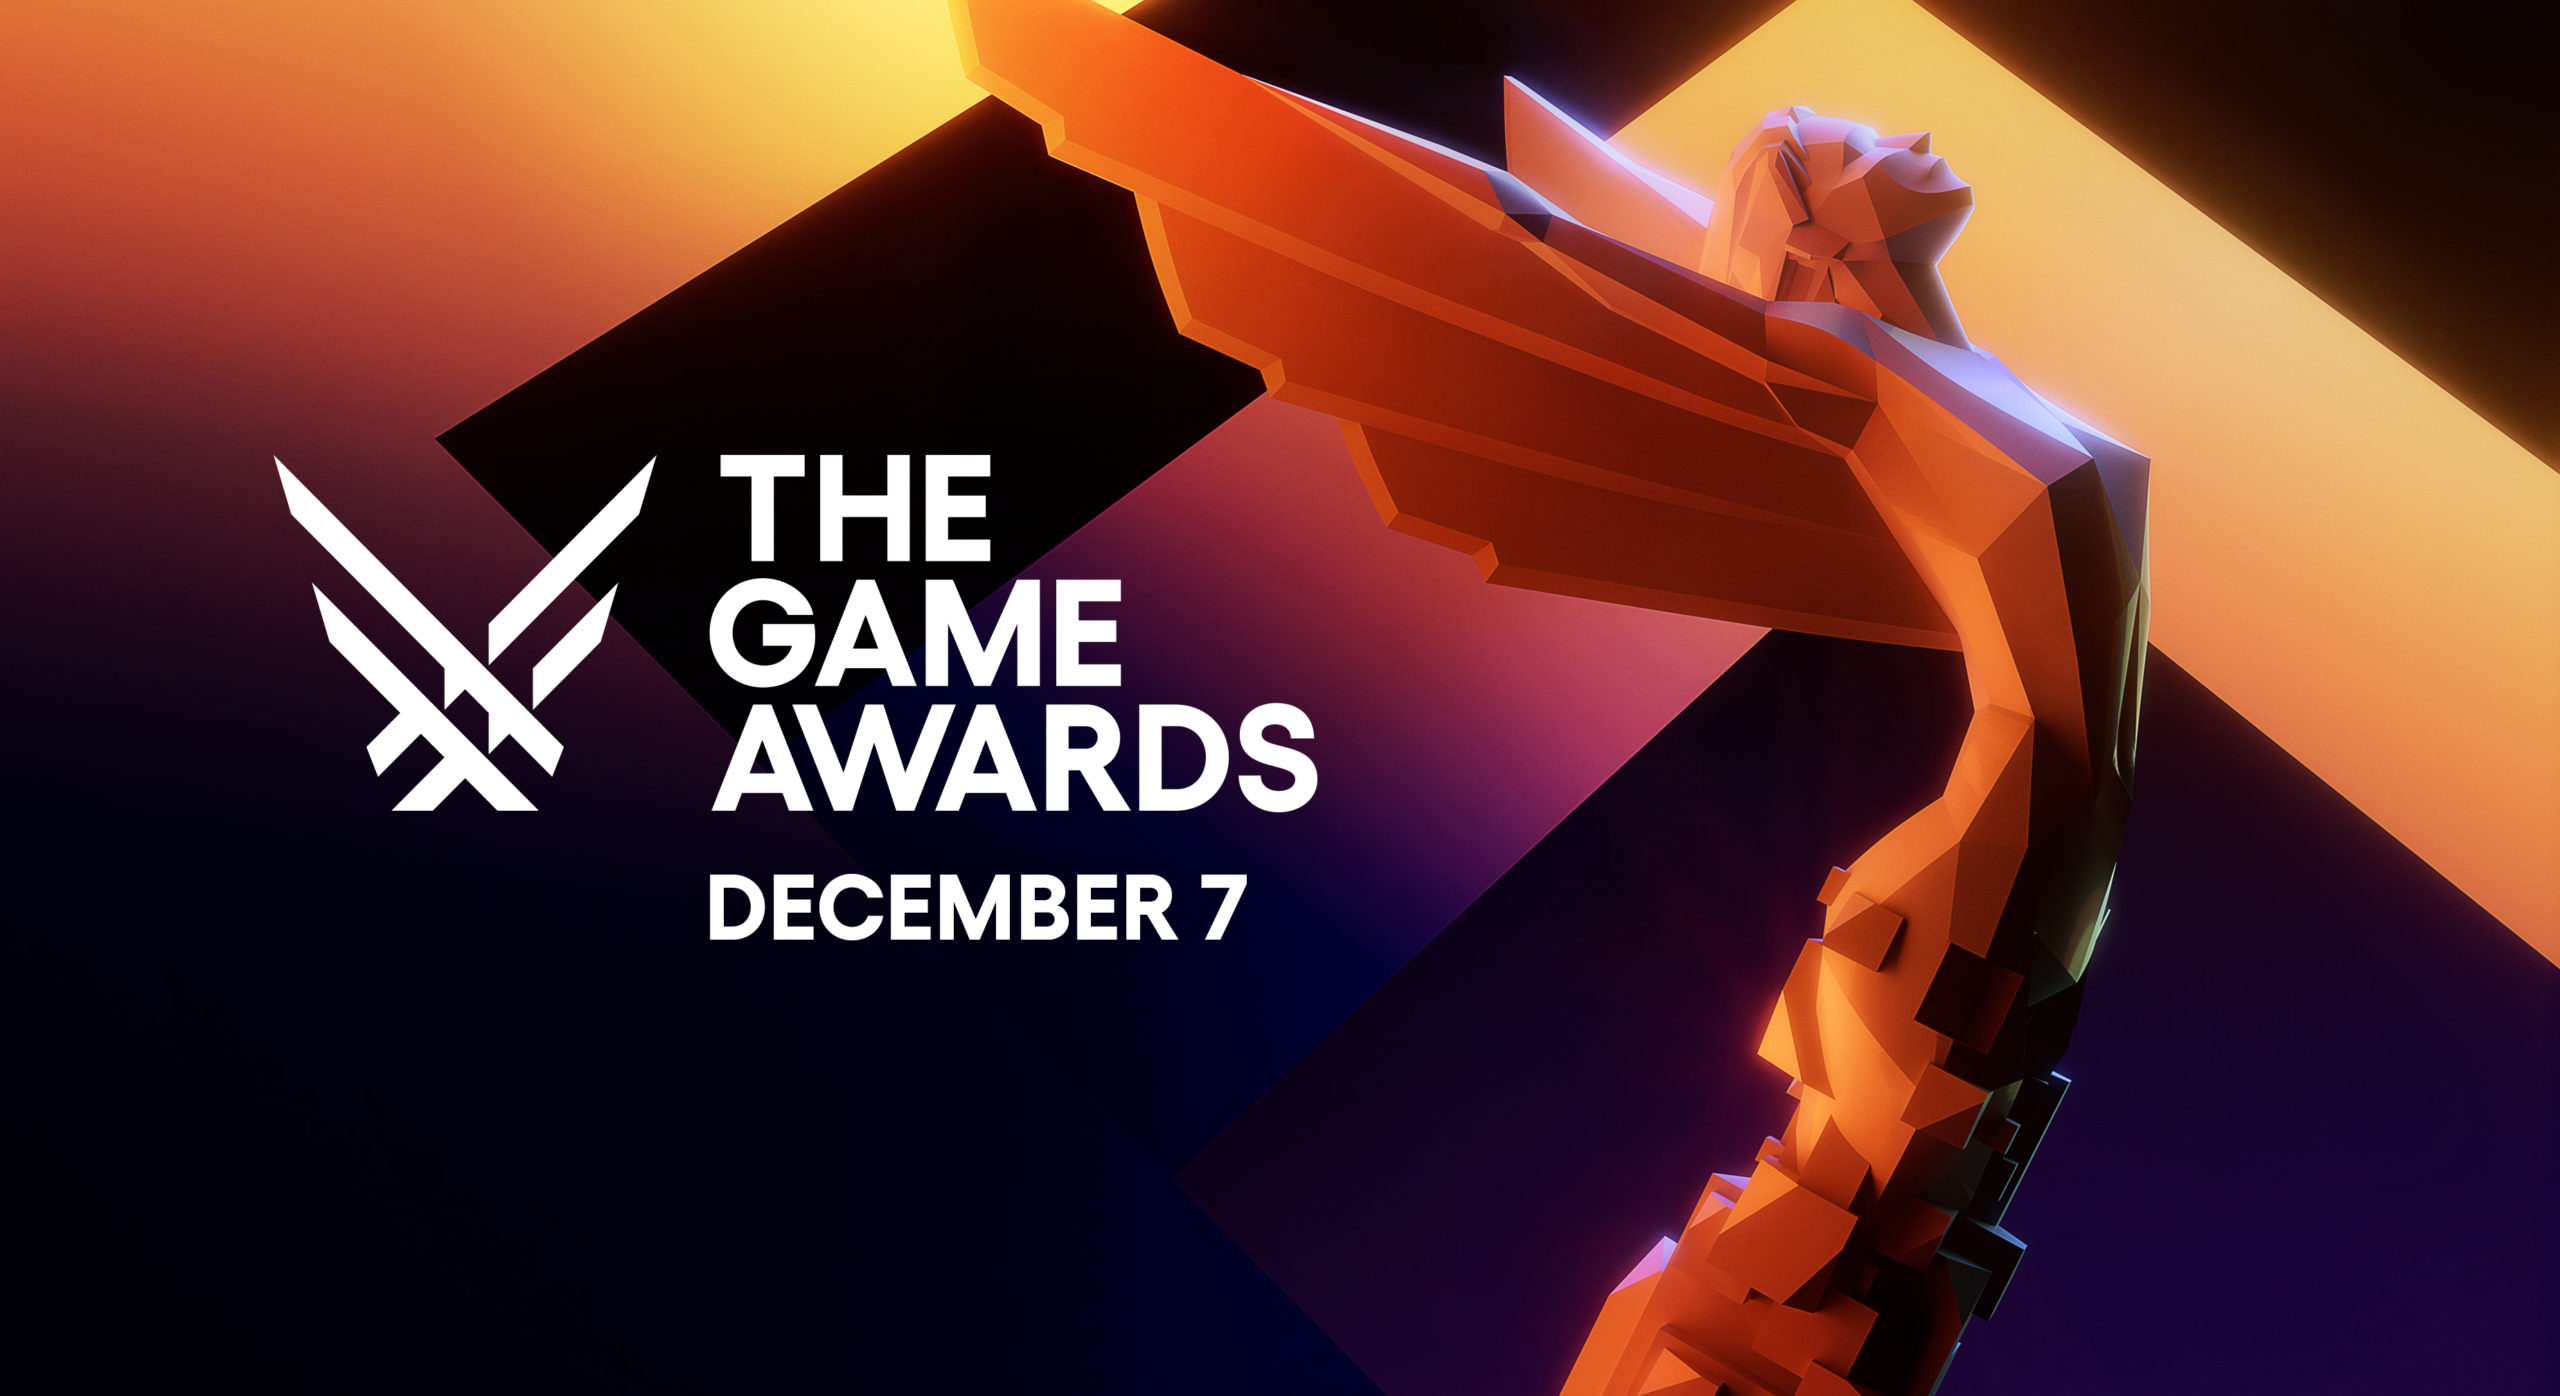 Alan Wake 2 and Baldur’s Gate 3 top nominations at The Game Awards 2023